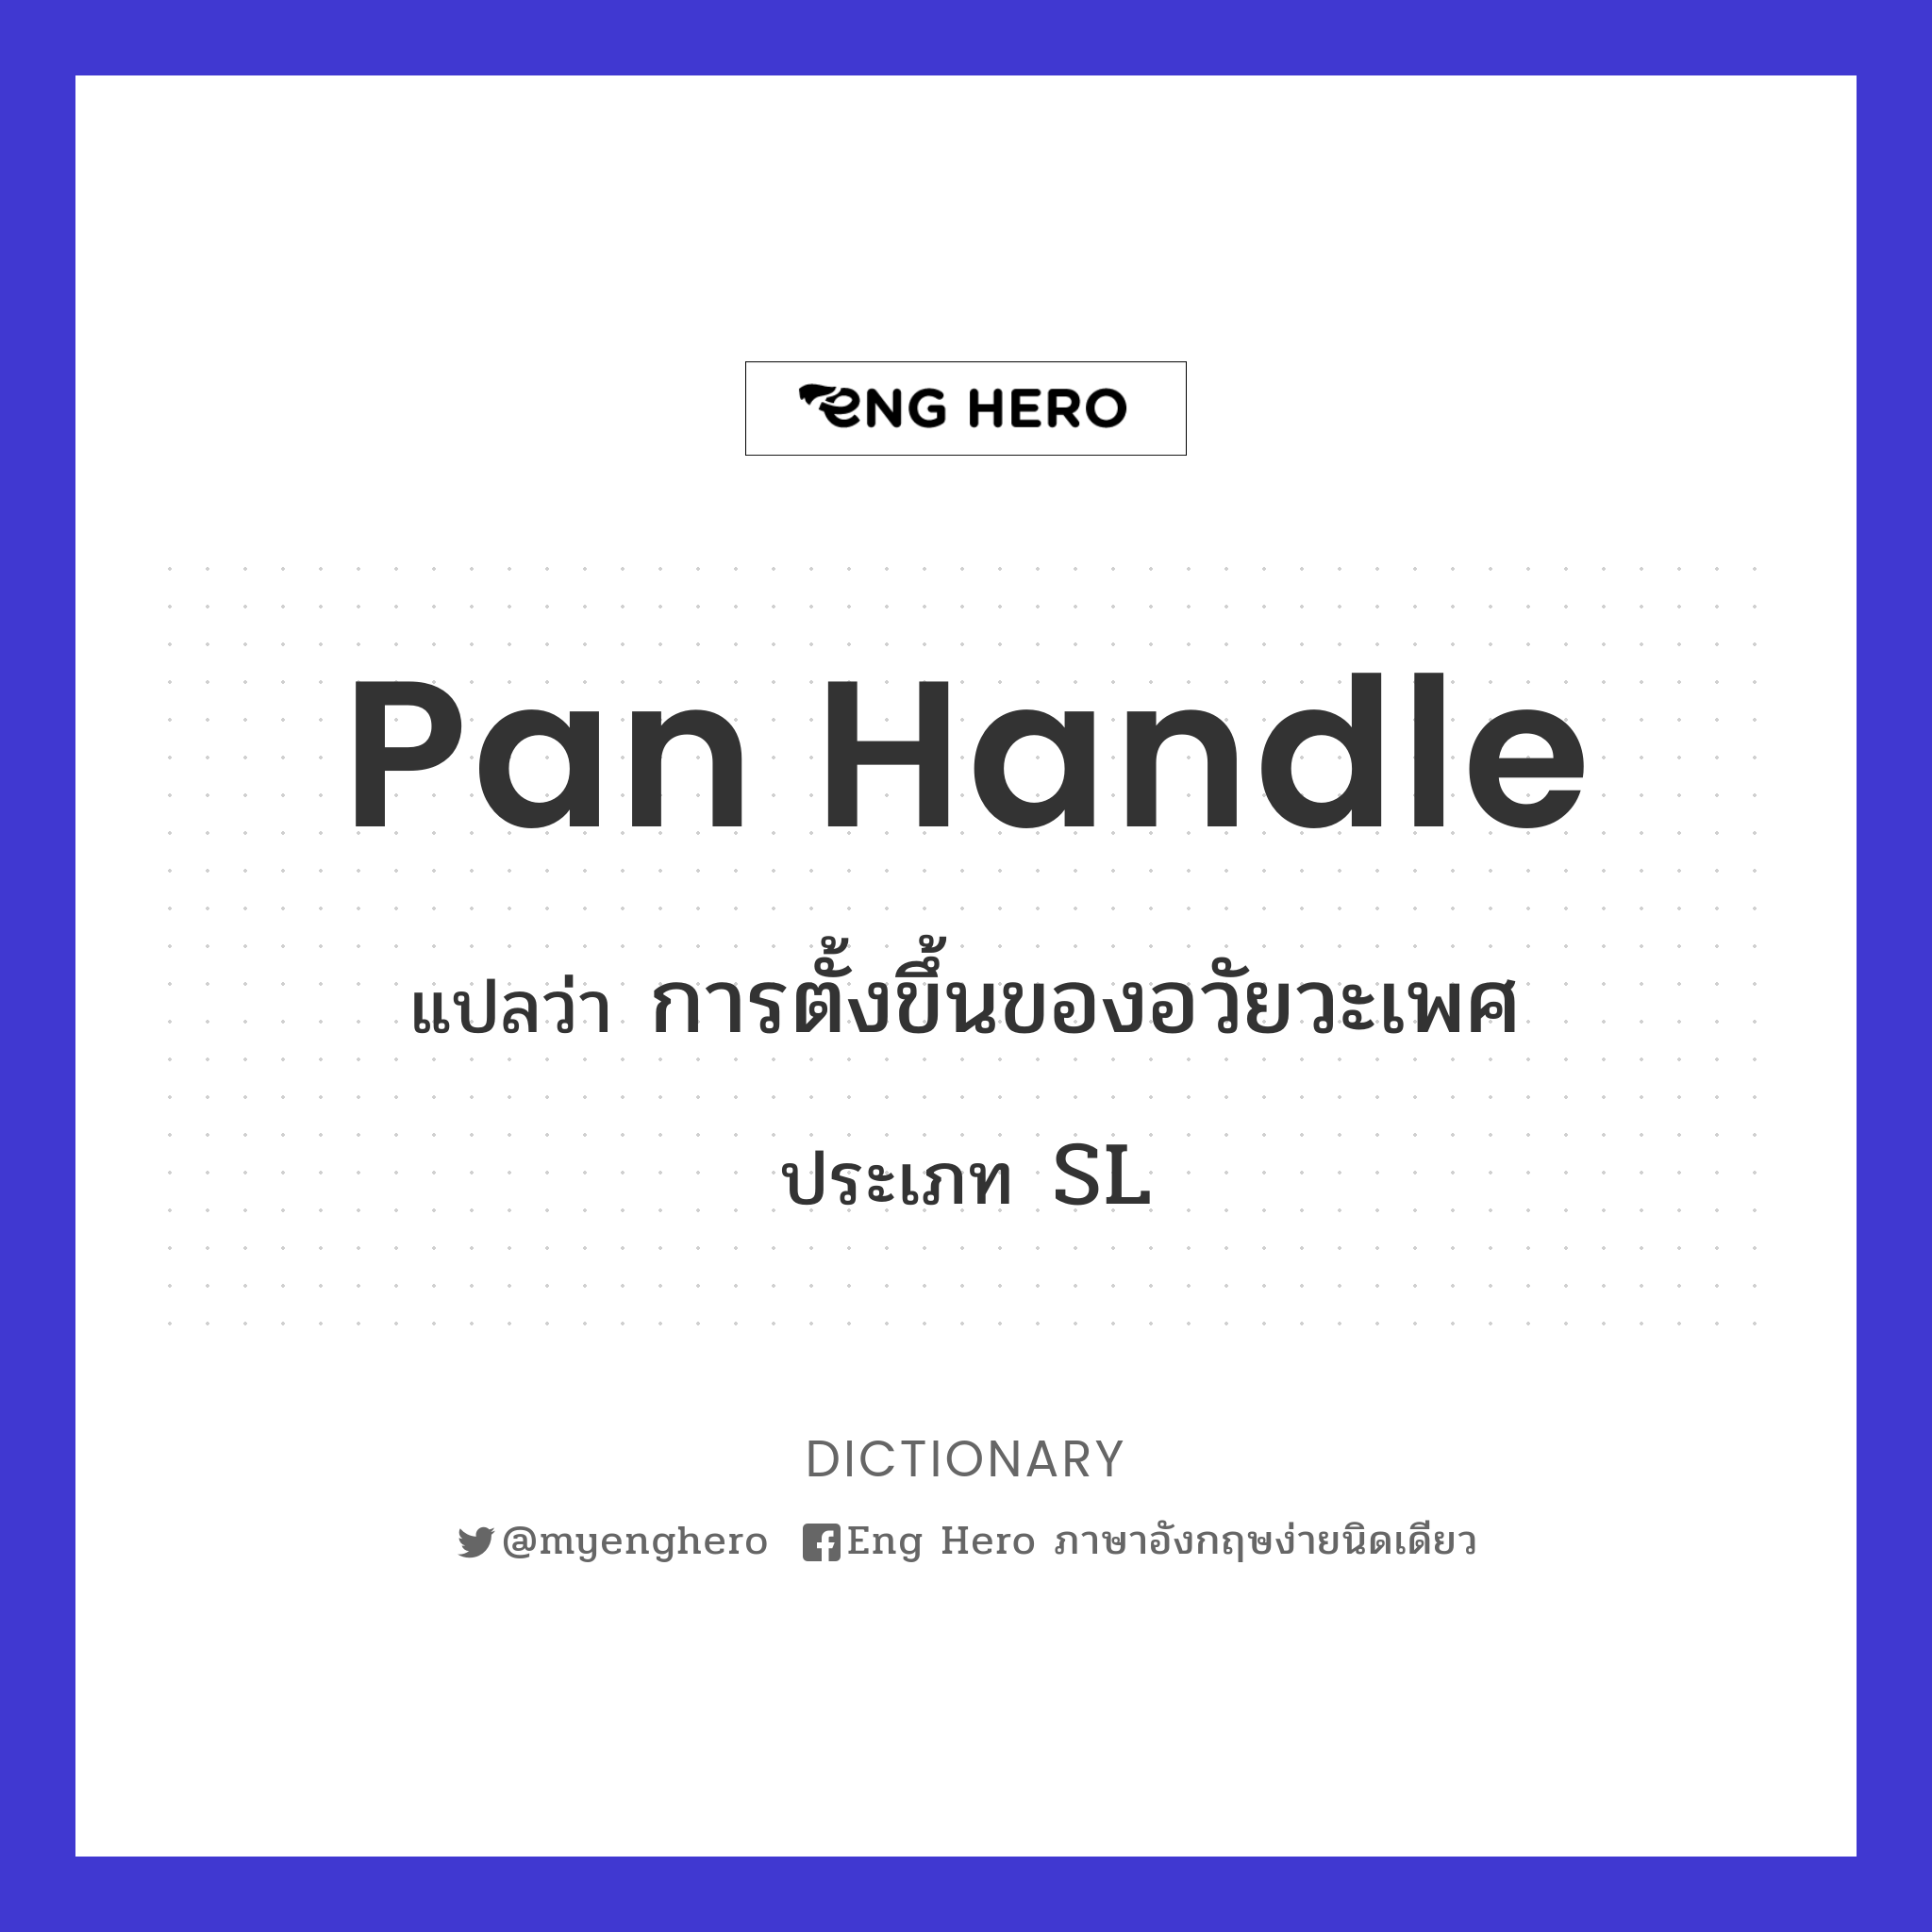 pan handle